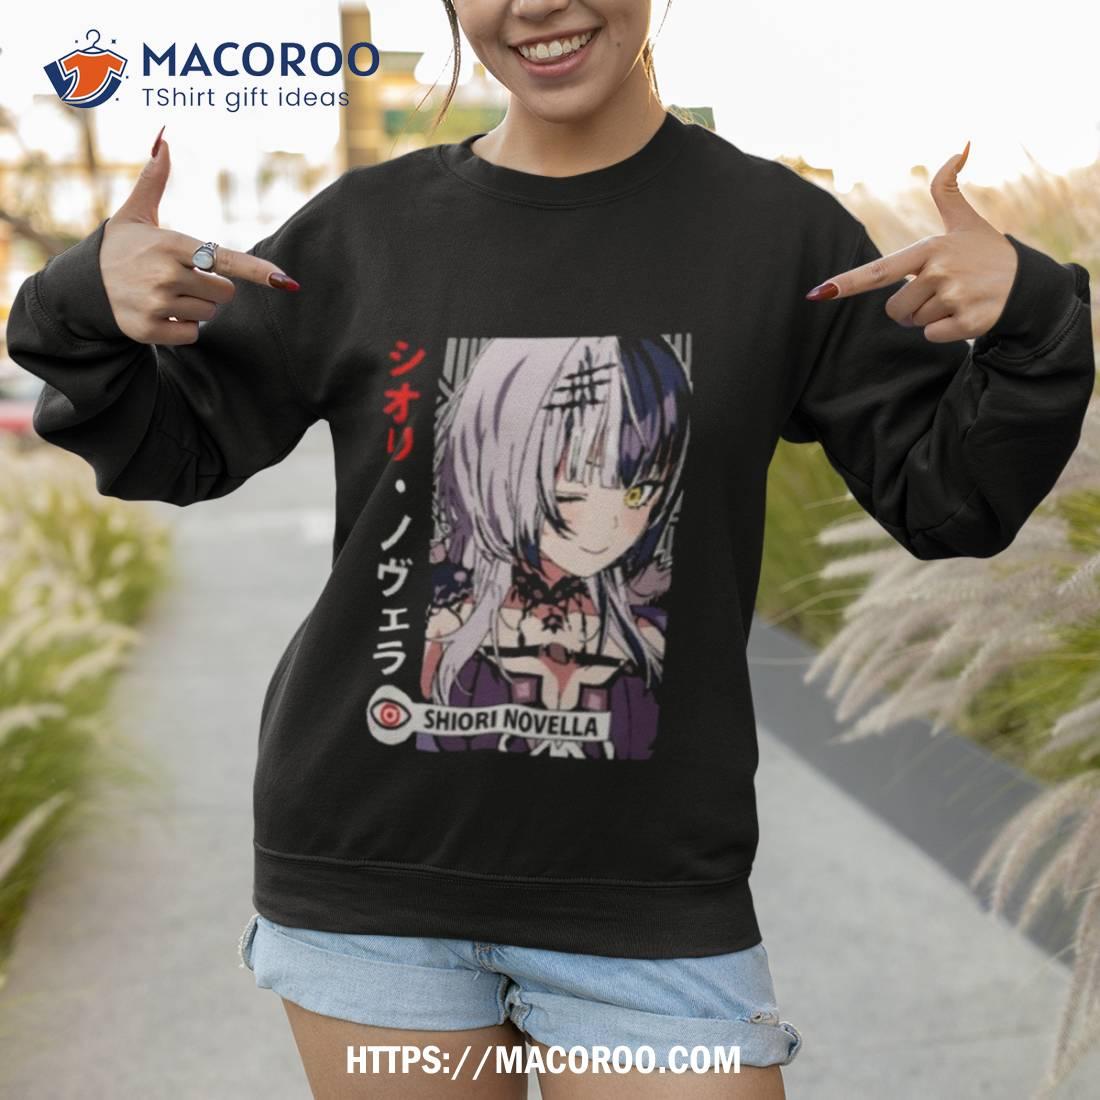 Shiori Novella Advent Wink Waifu Anime Fan Gifts Shirt Sweatshirt